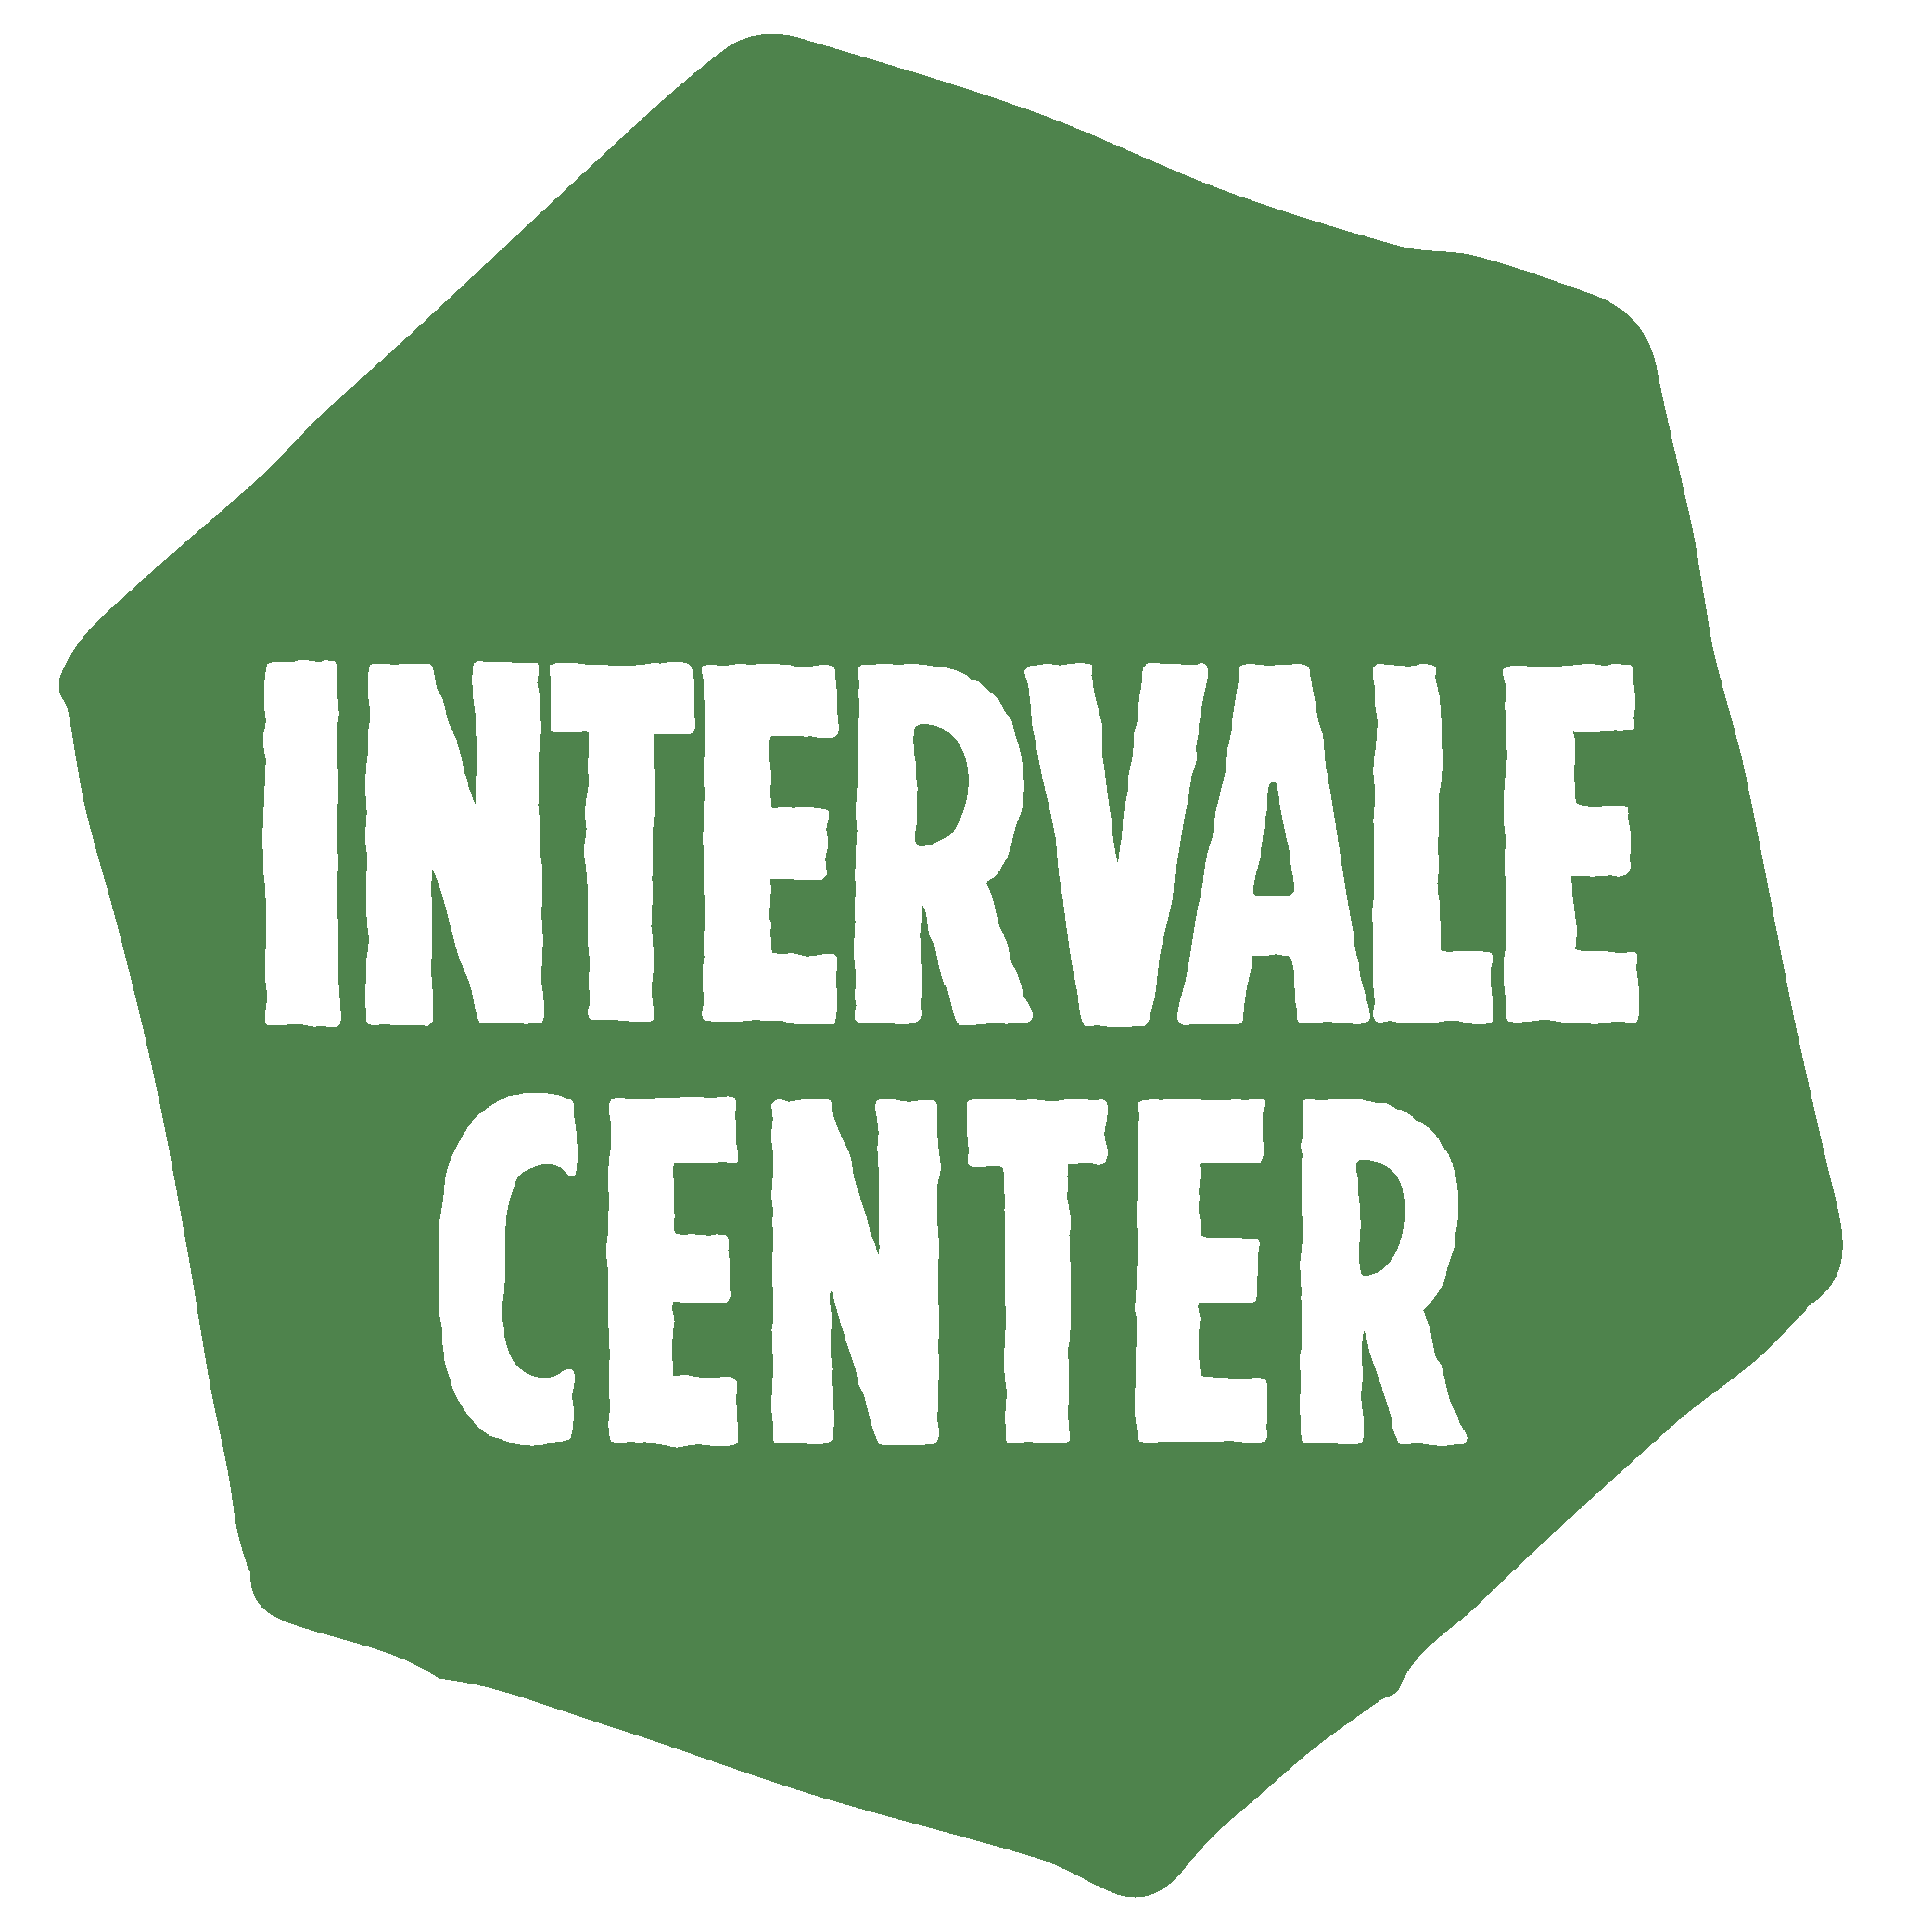 Intervale Center